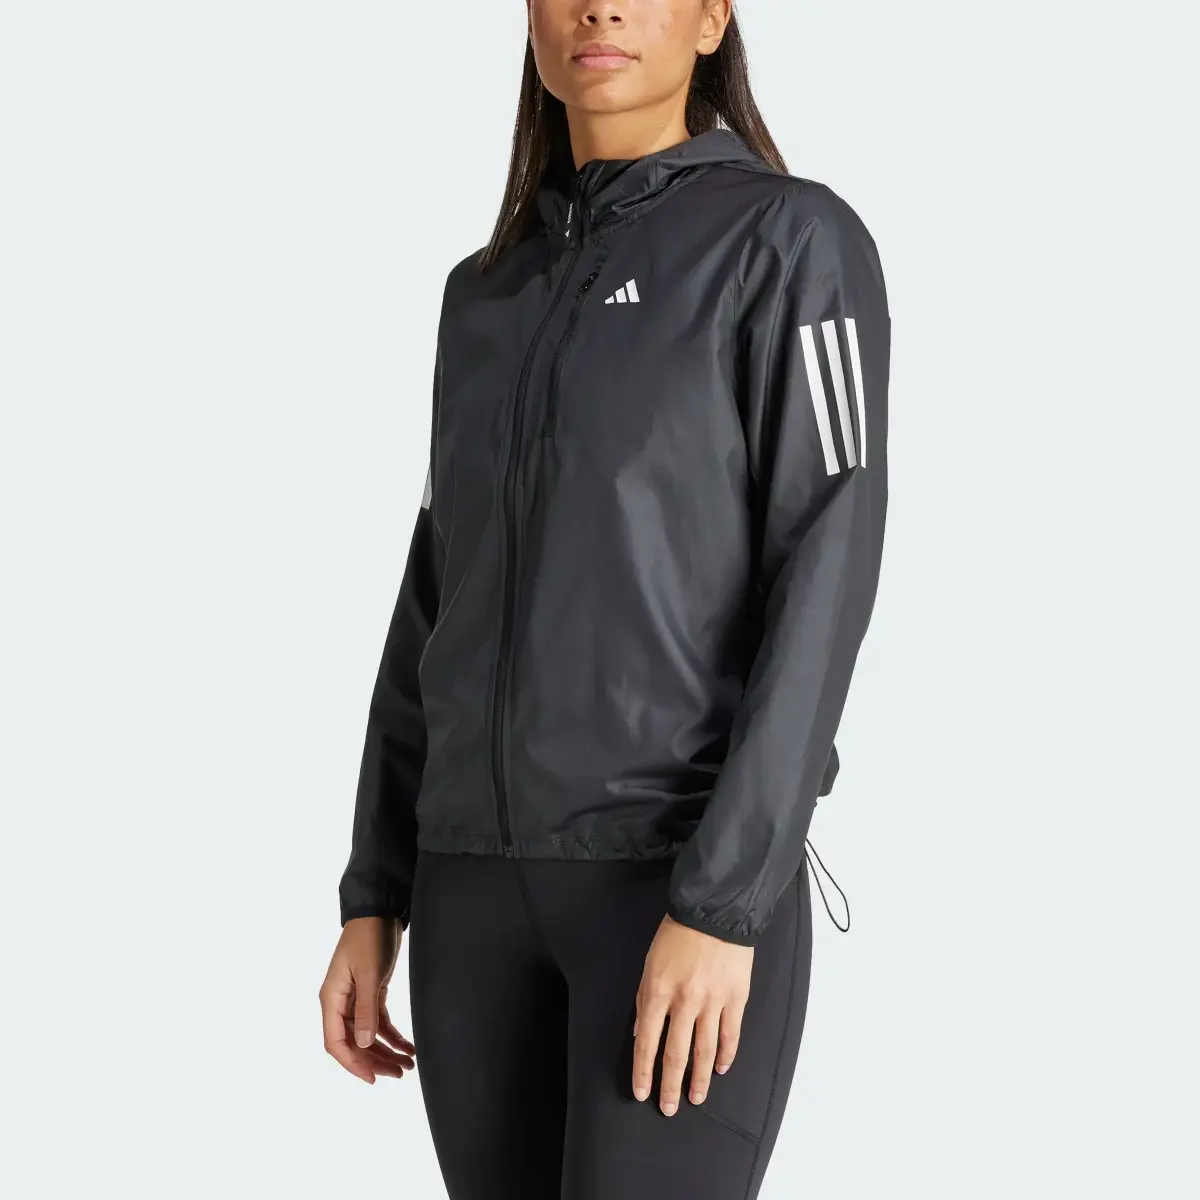 Adidas Own The Run Jacket. 1